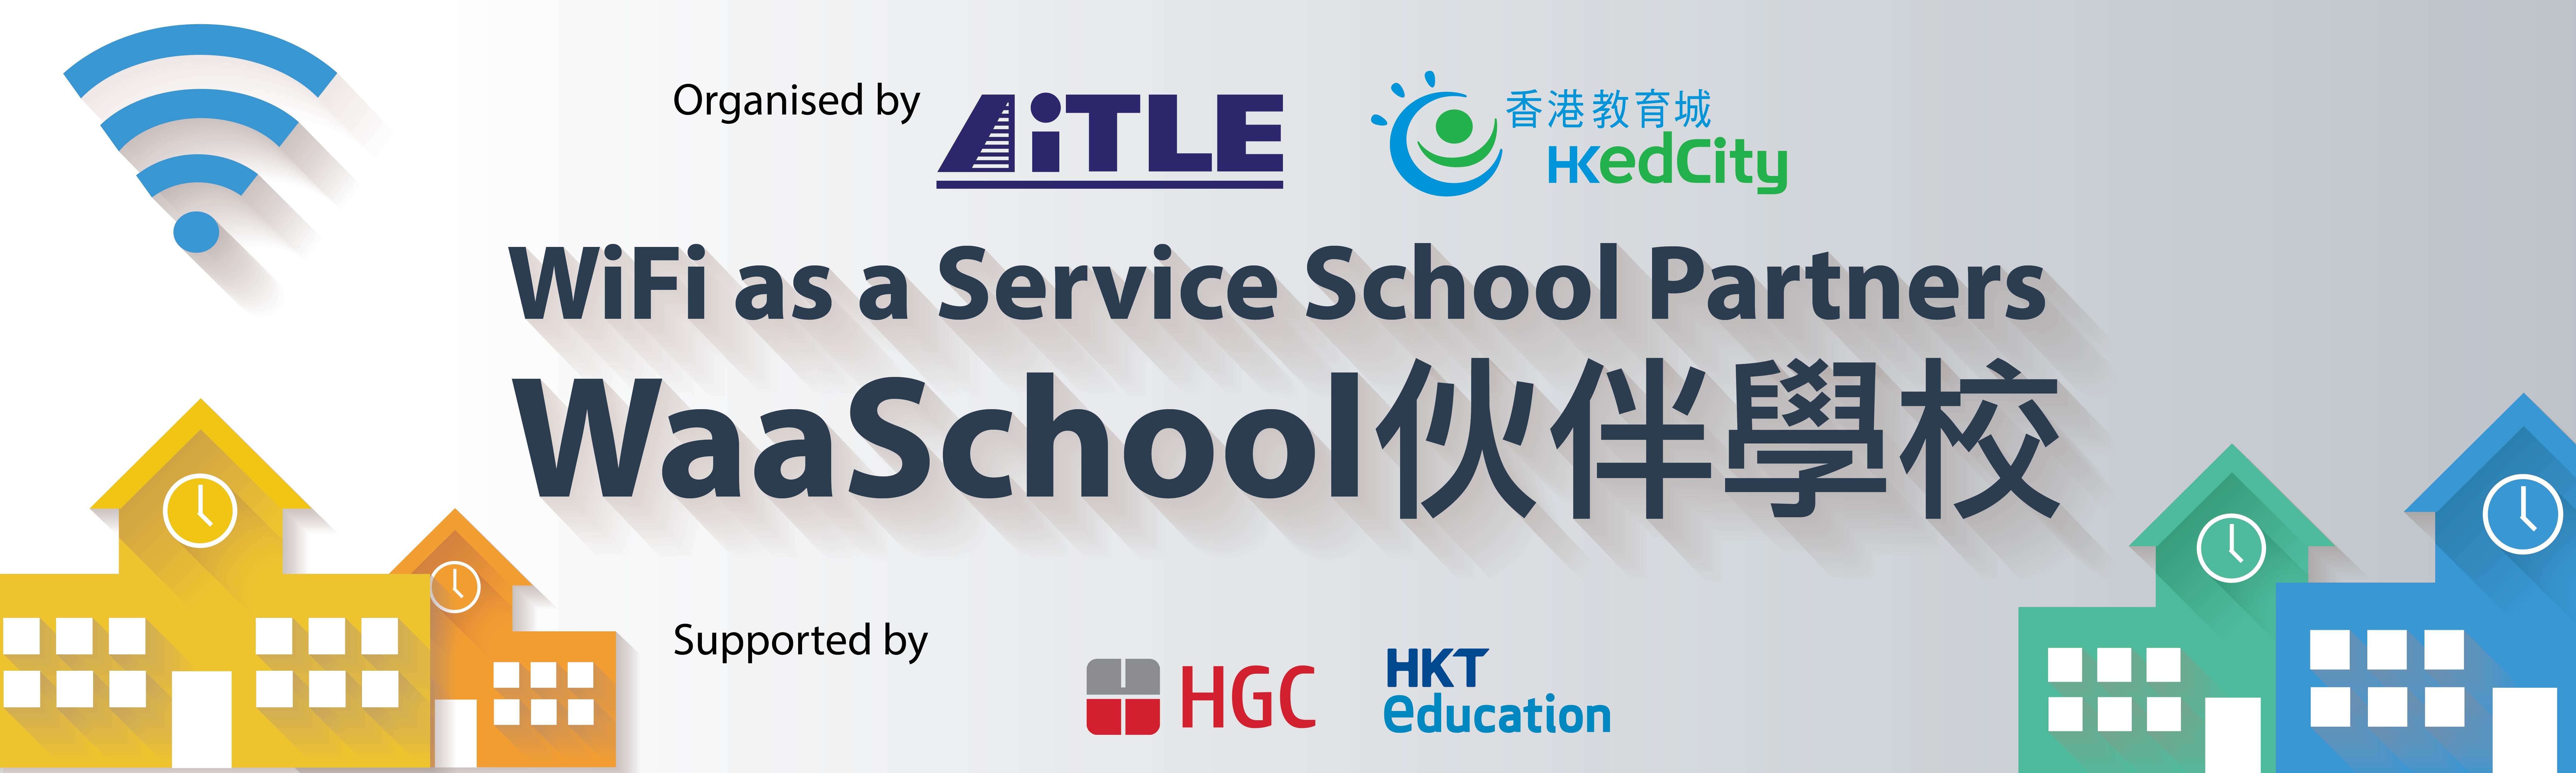 AiTLE-HKEDCITY “WiFi as a Services” (WaaS) Program : WaaS School List